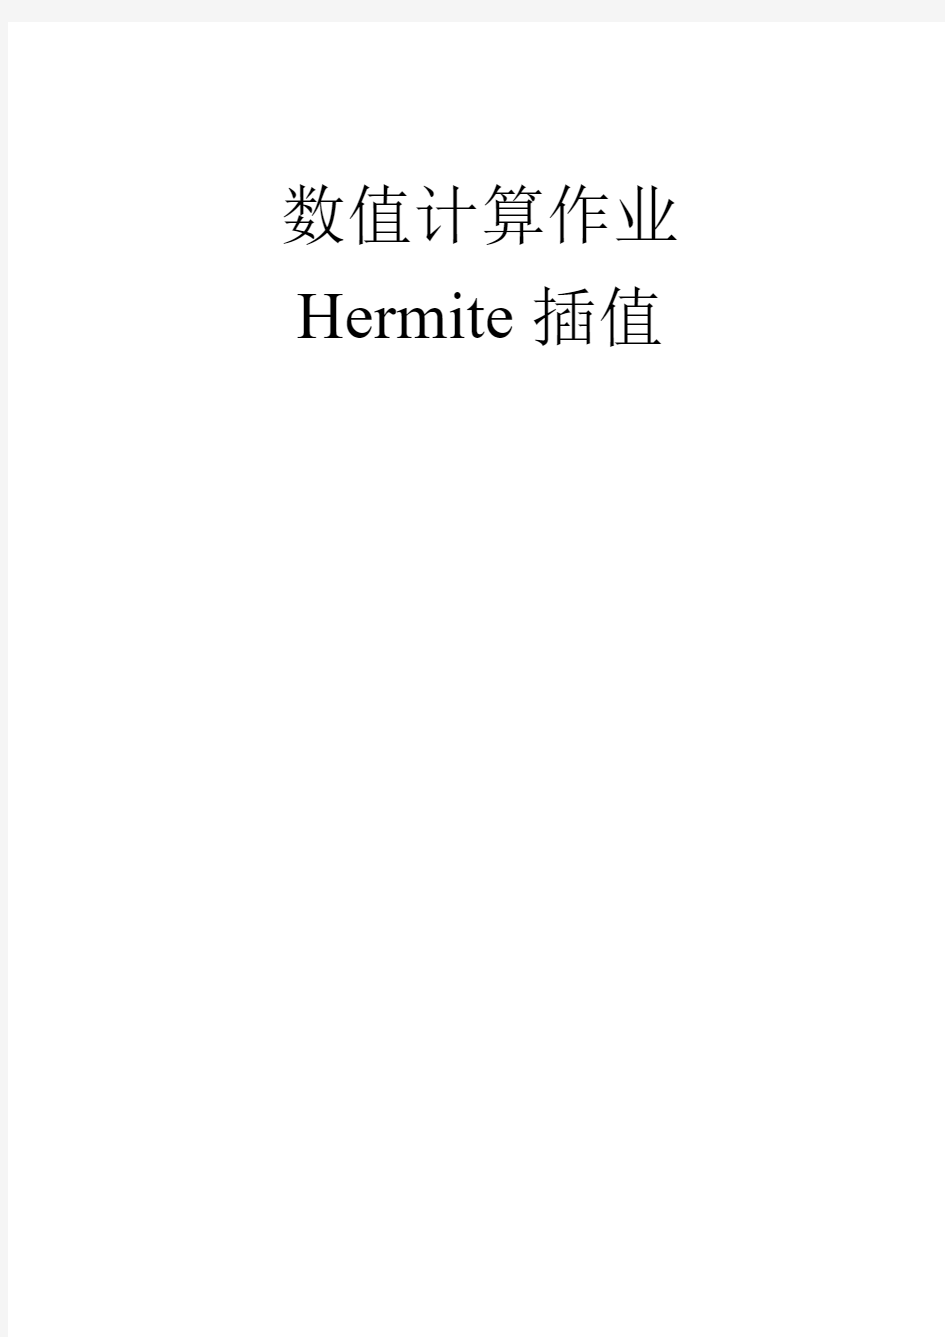 Hermite插值多项式H